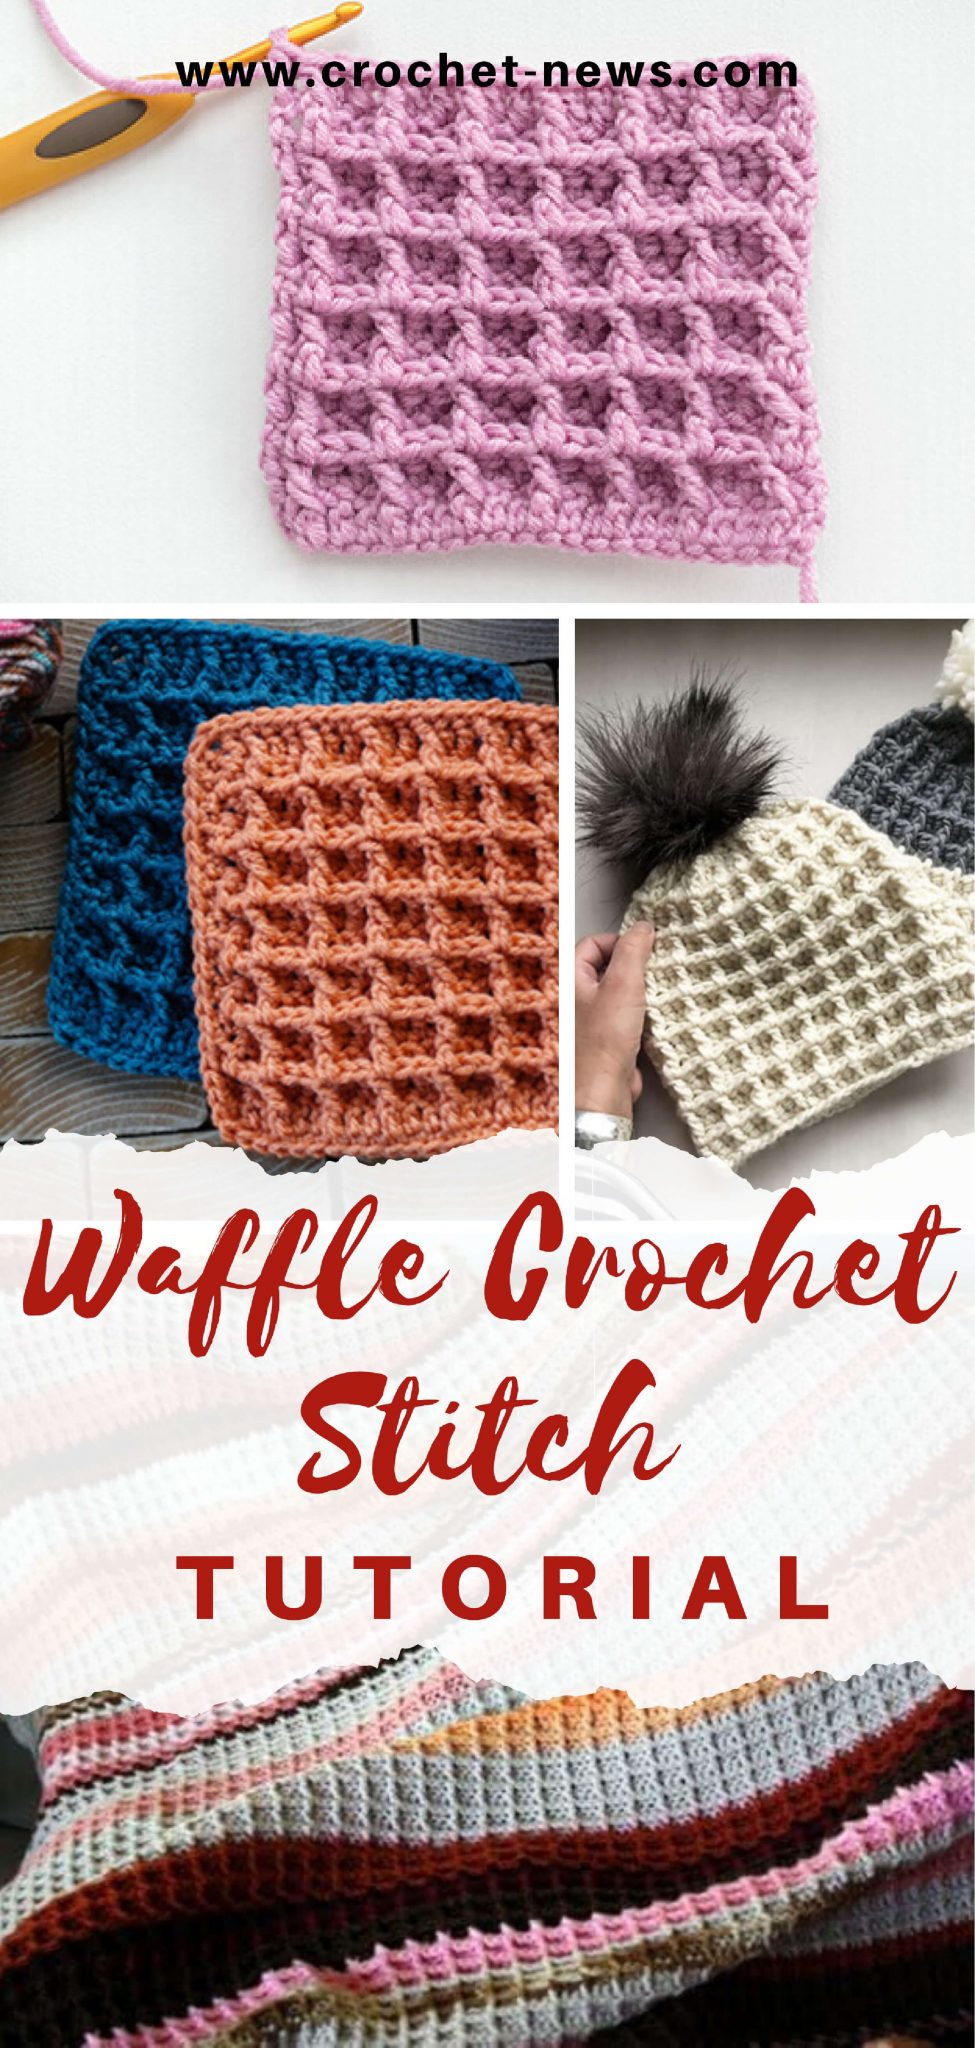 Crochet Stitches For Blankets - Crochet News